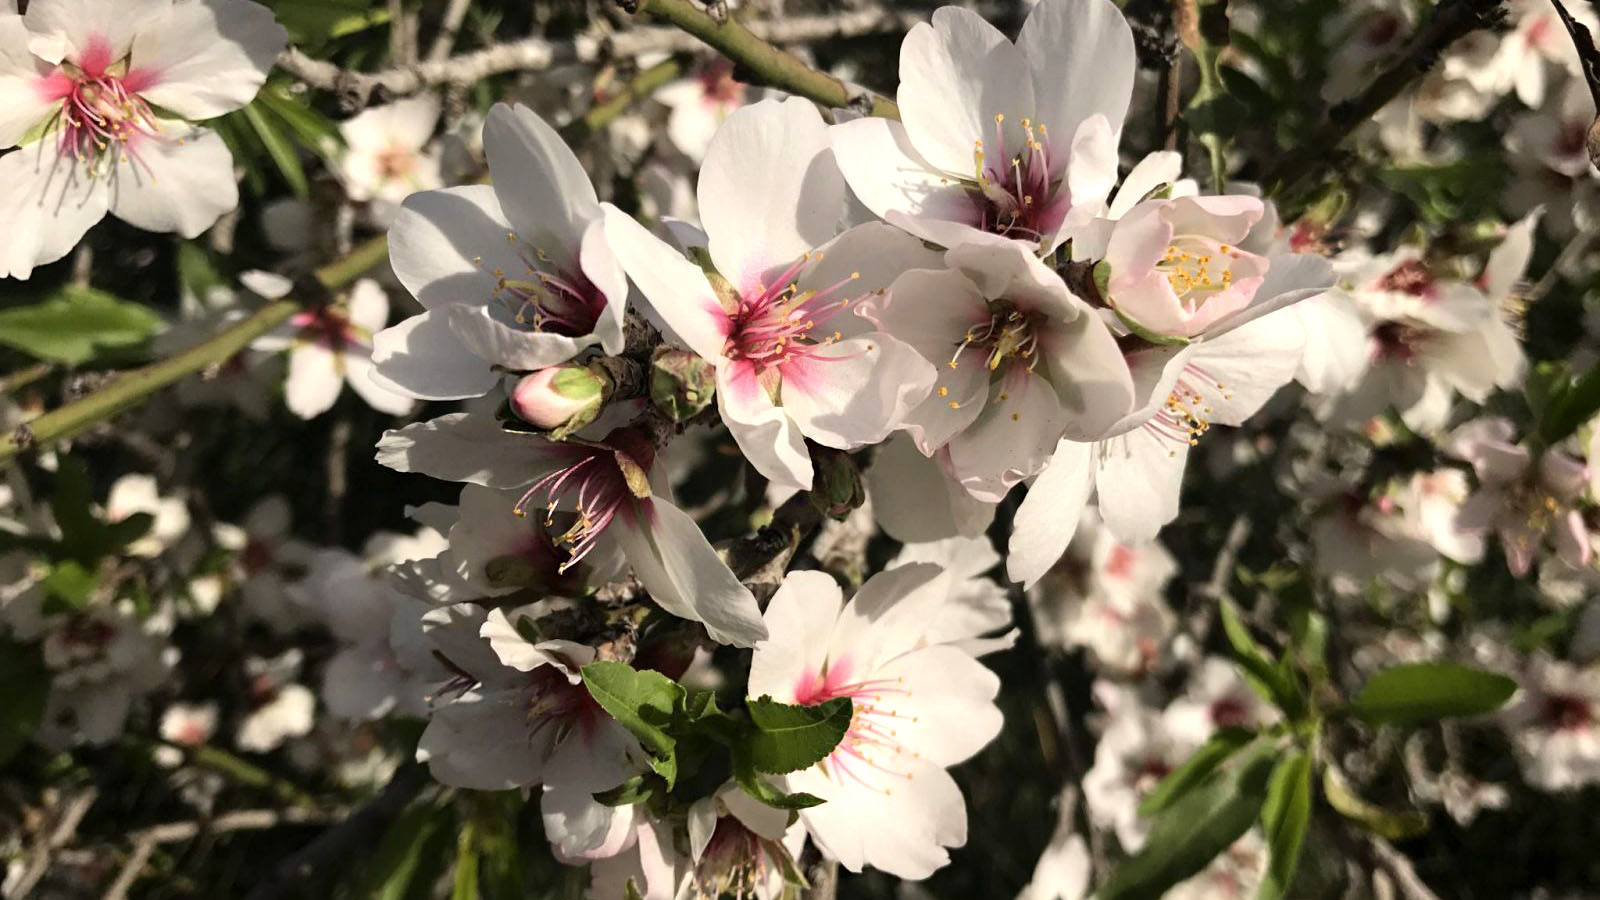 Almond blossom in Horashim Forest. Photo by Nicky Blackburn.